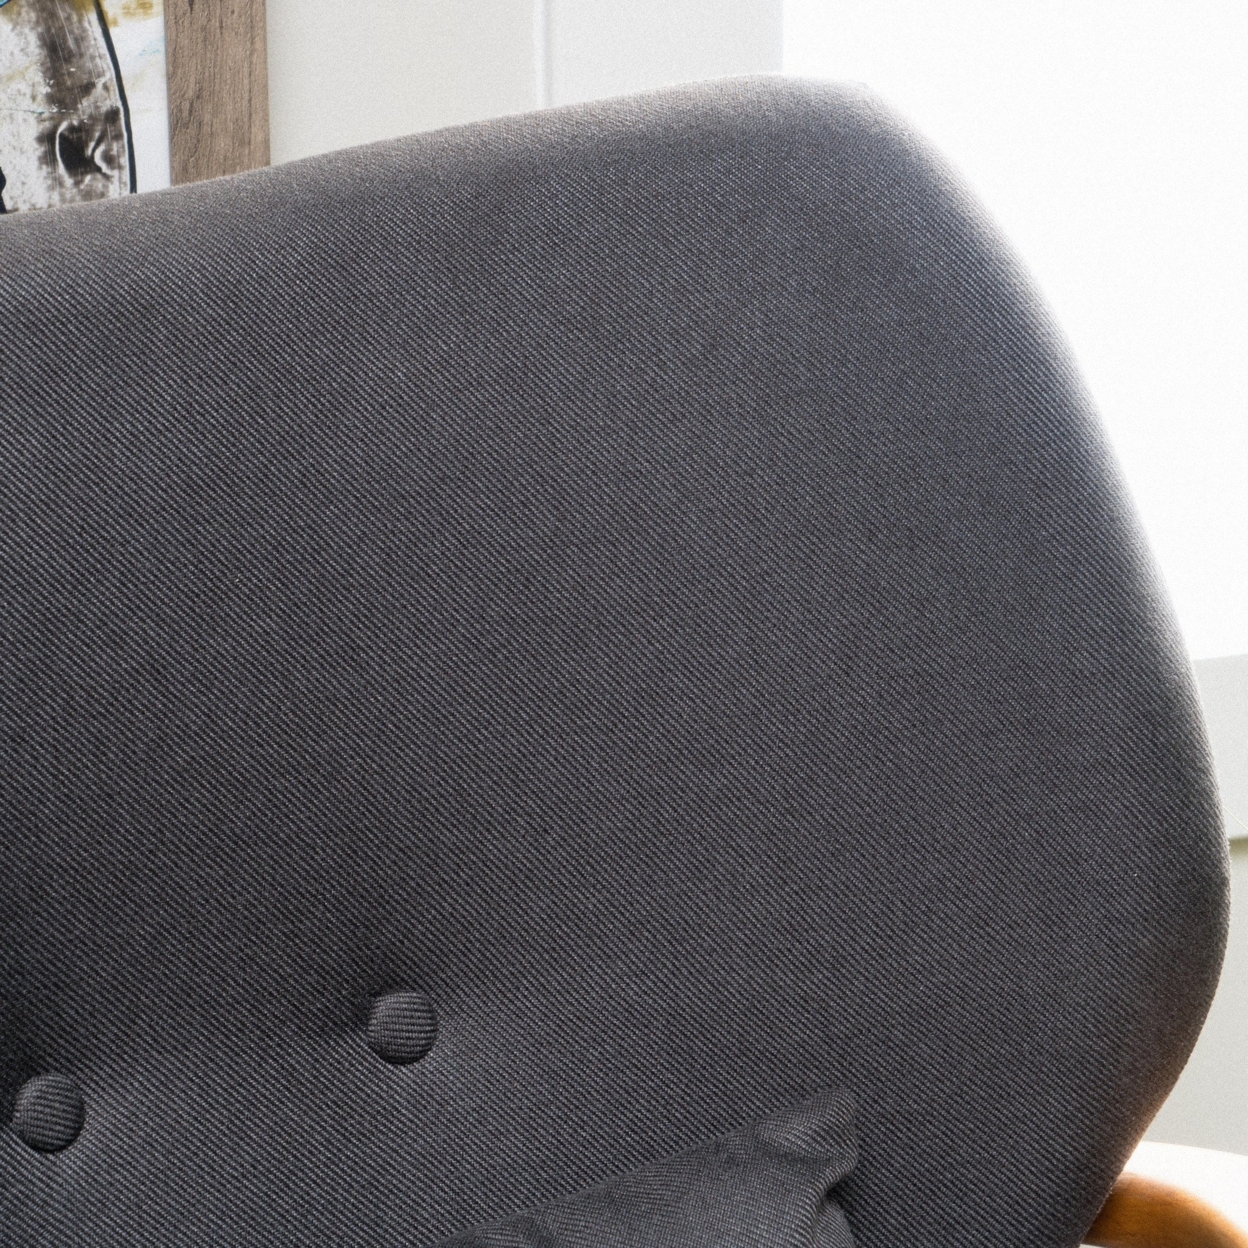 Ventura Mid Century Modern Fabric Club Chair - Beige, Natural